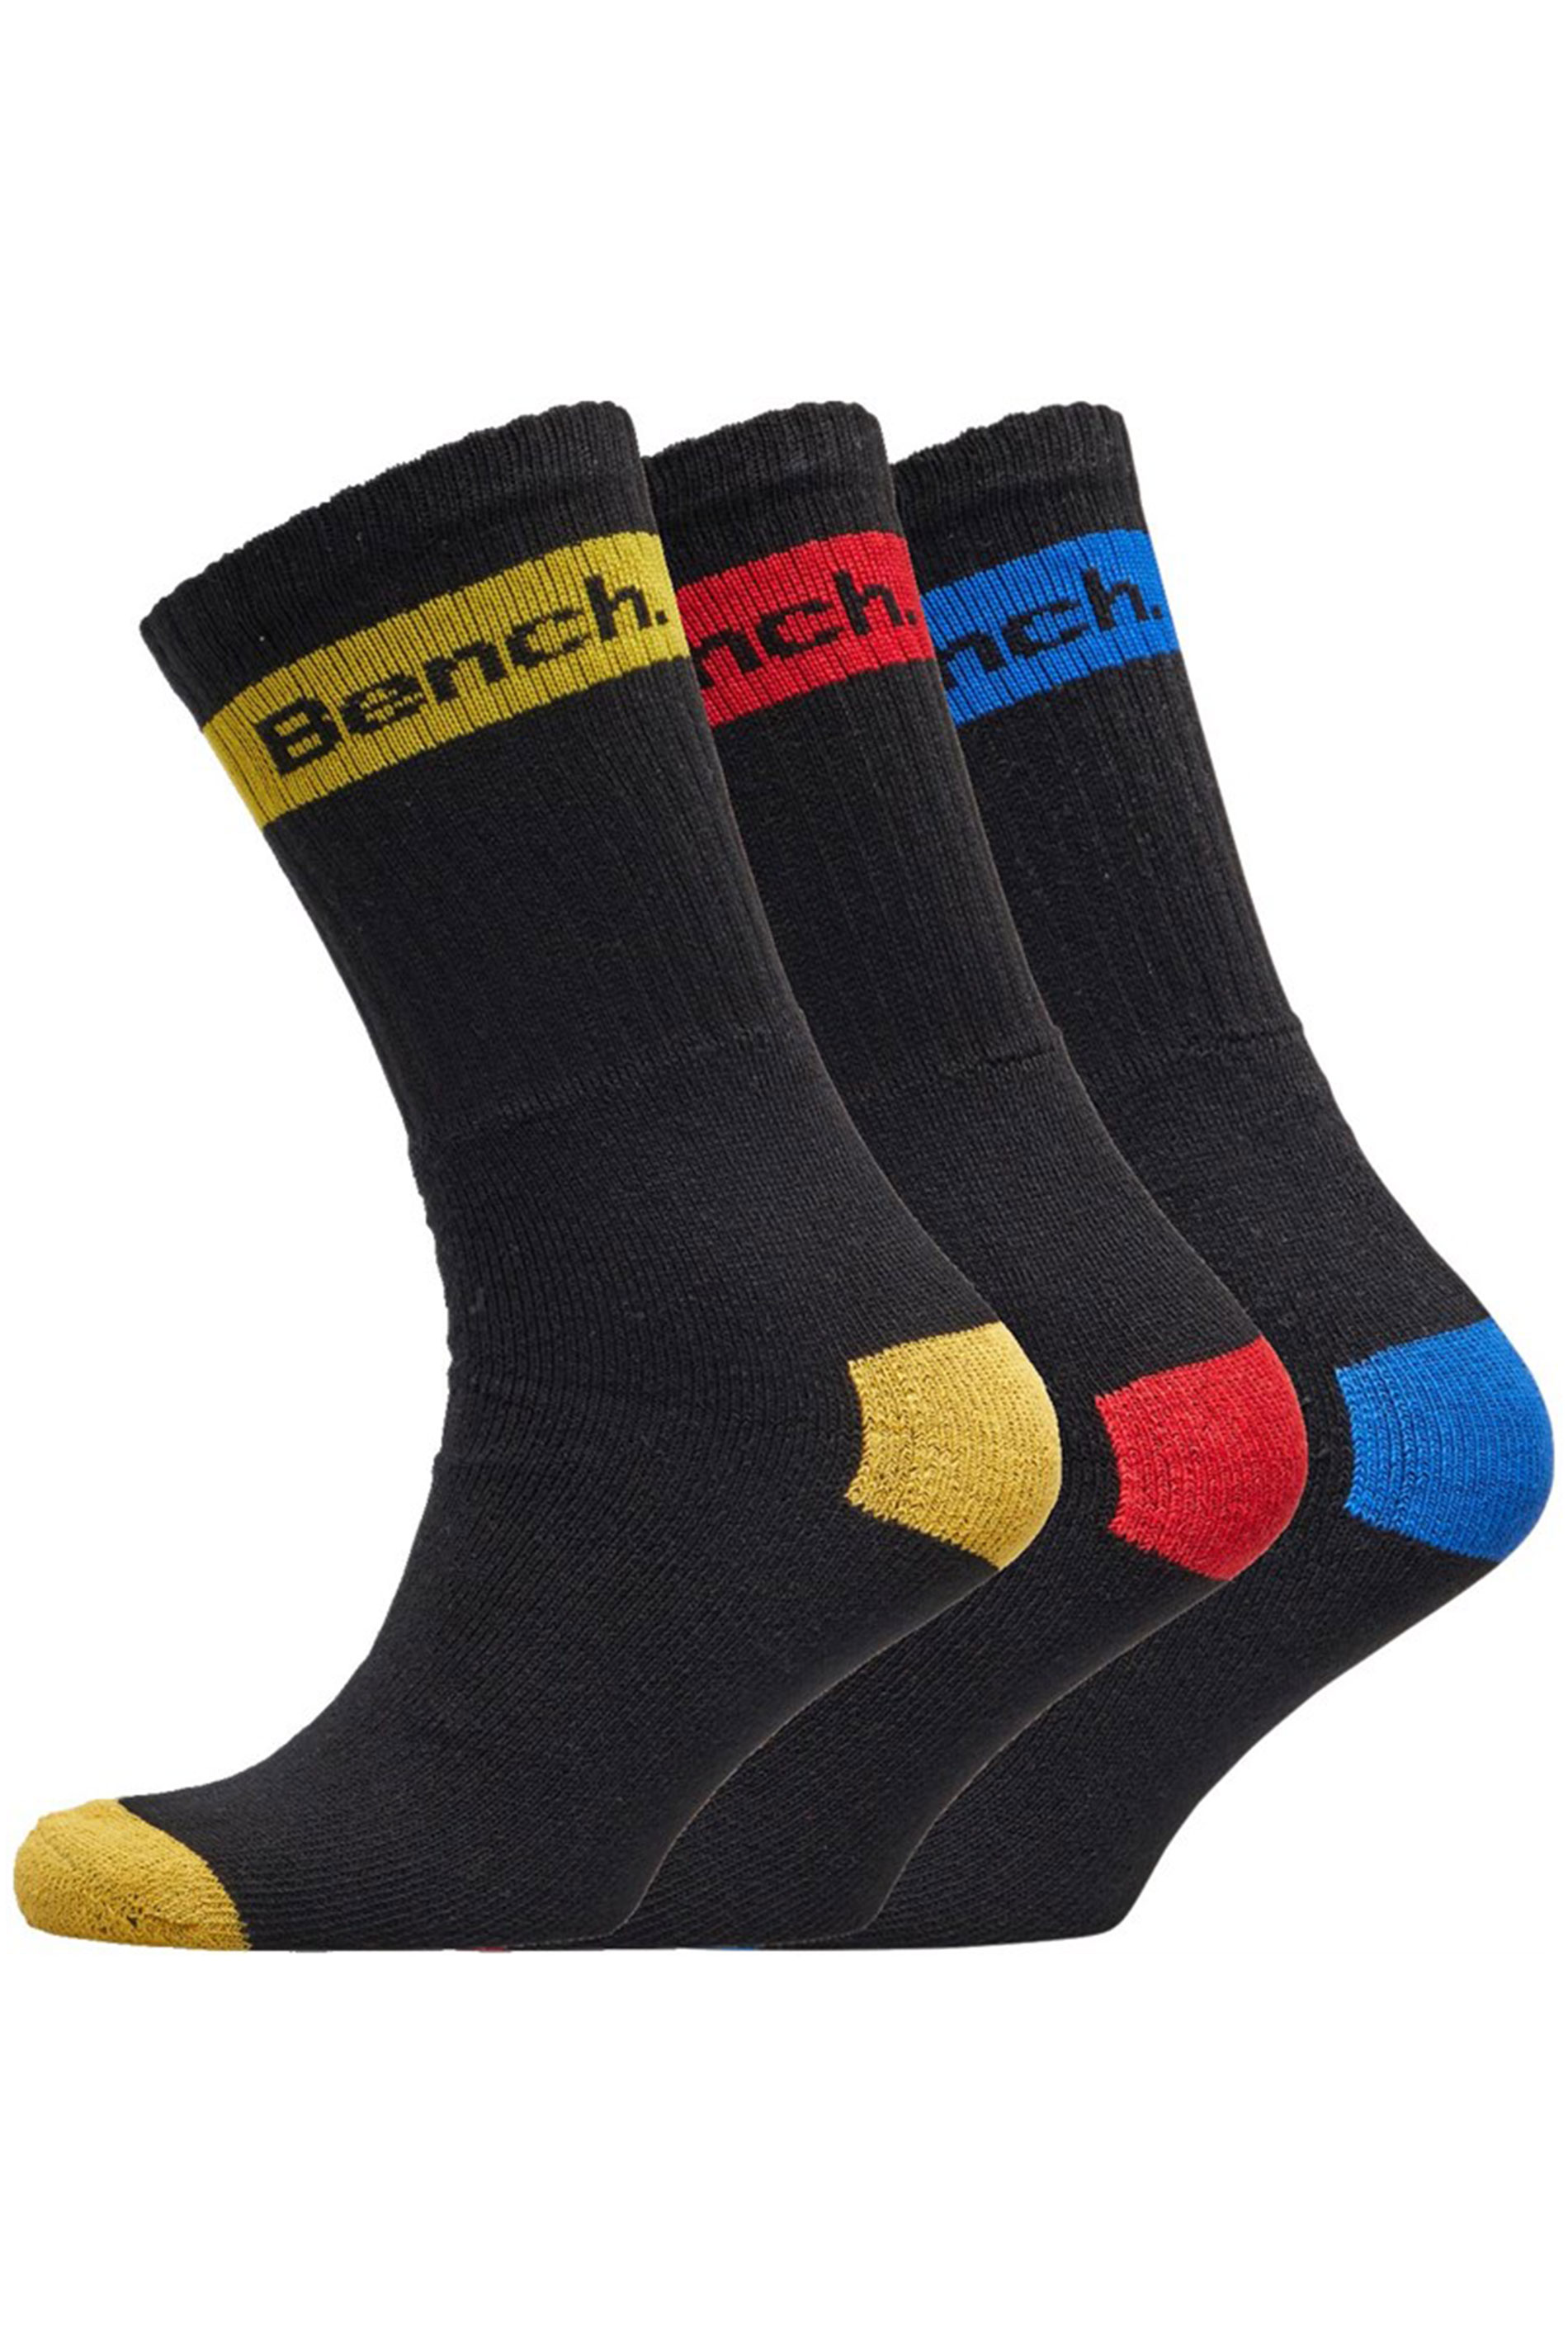 BENCH 3 PACK Black Sport Crew Socks | BadRhino